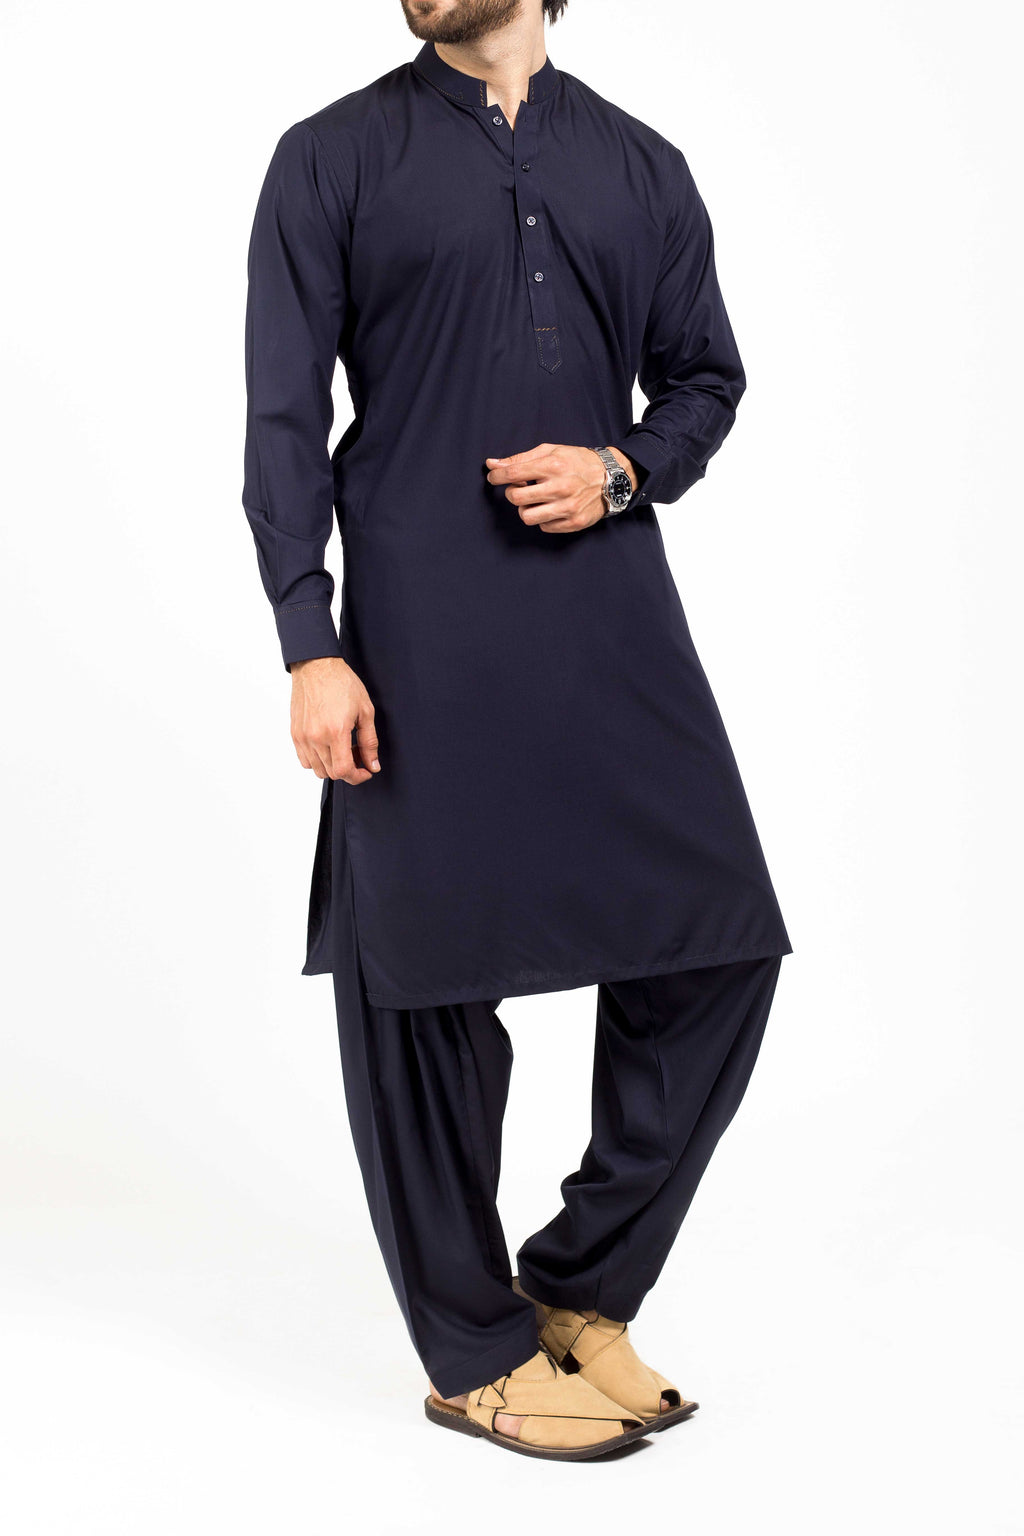 Navy Blue Shalwar Qameez Suit. RQ-39204